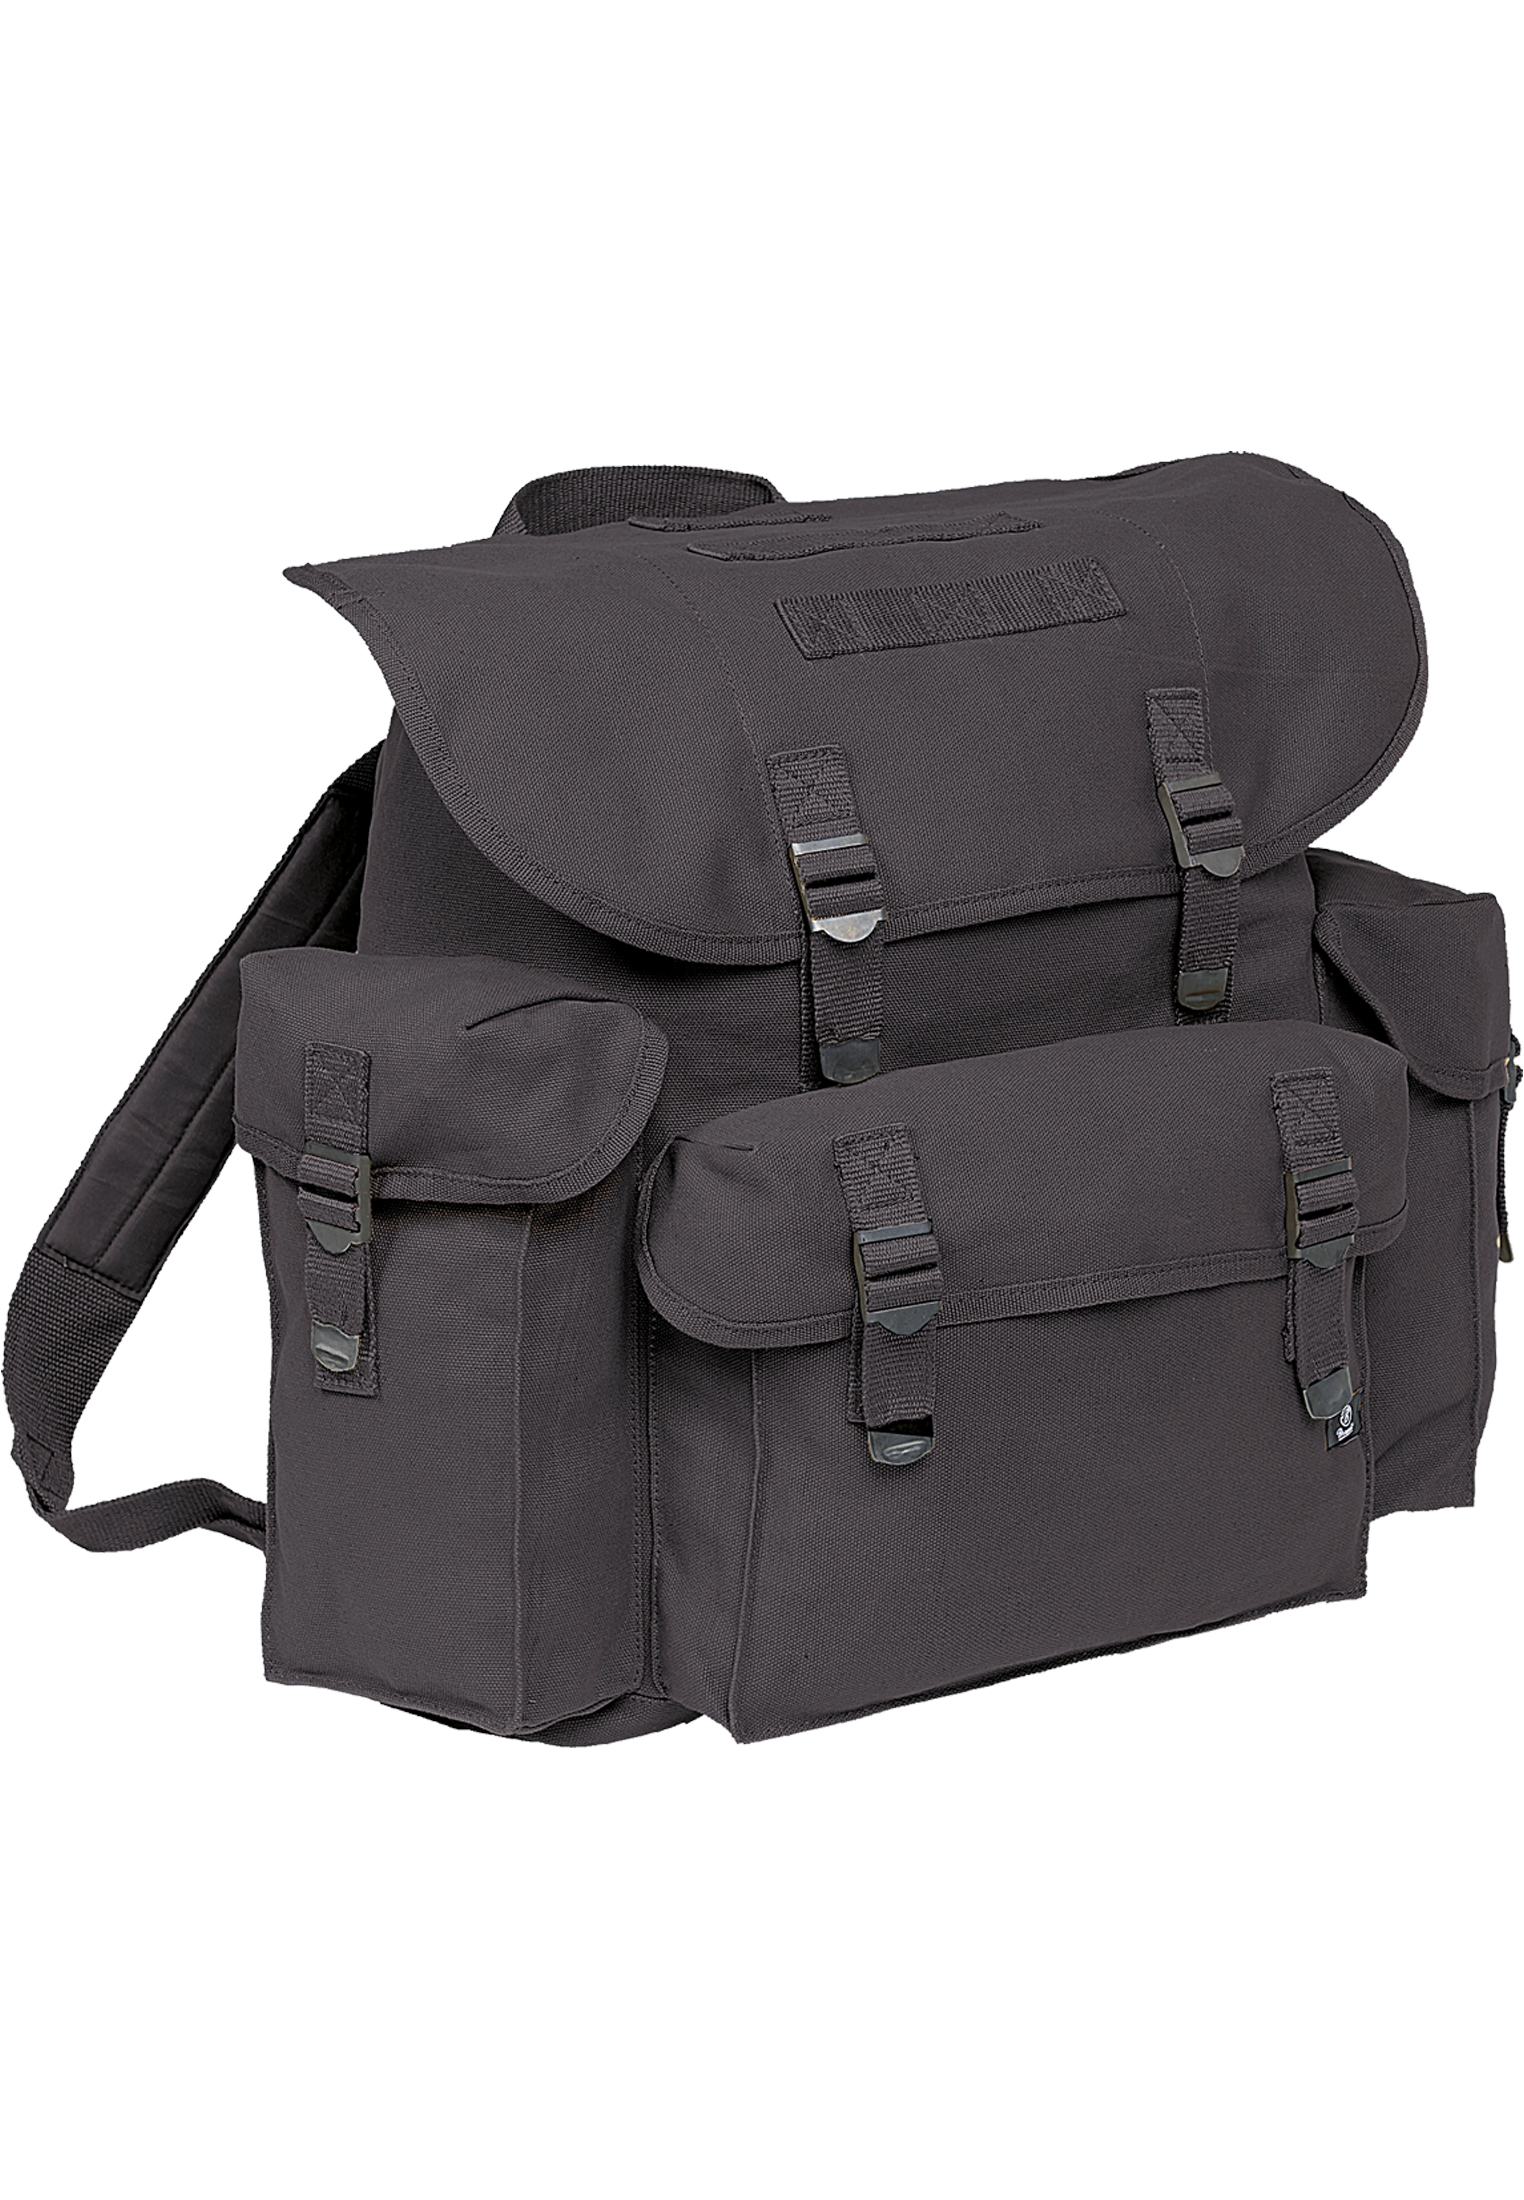 Taschen Pocket Military Bag in Farbe black